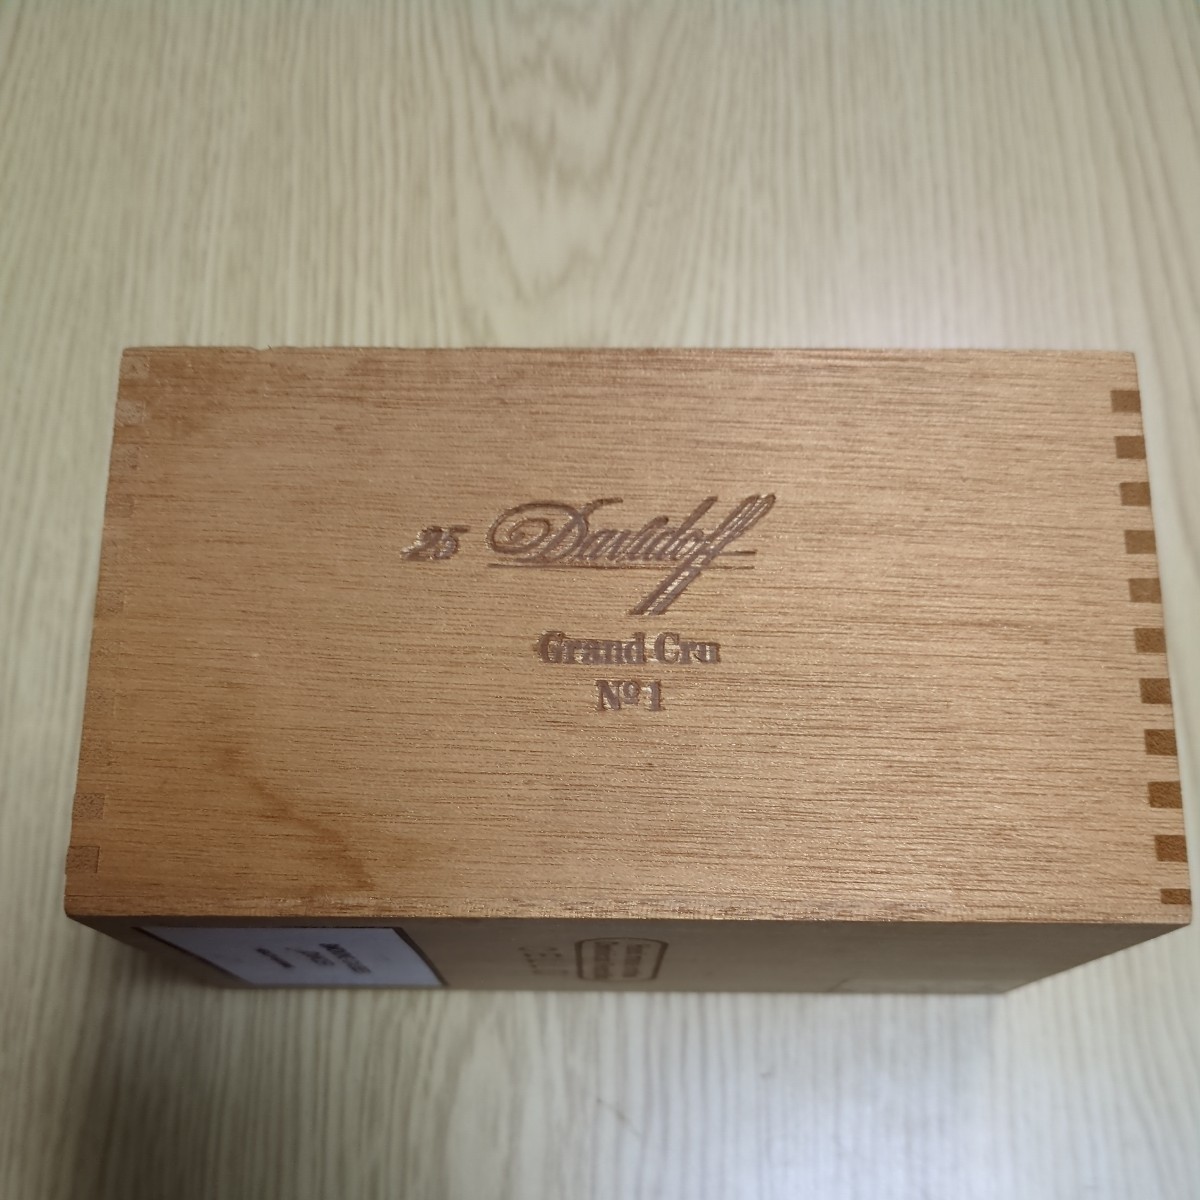  Davidoff Davidoff Grand Cru No1 cigar box 